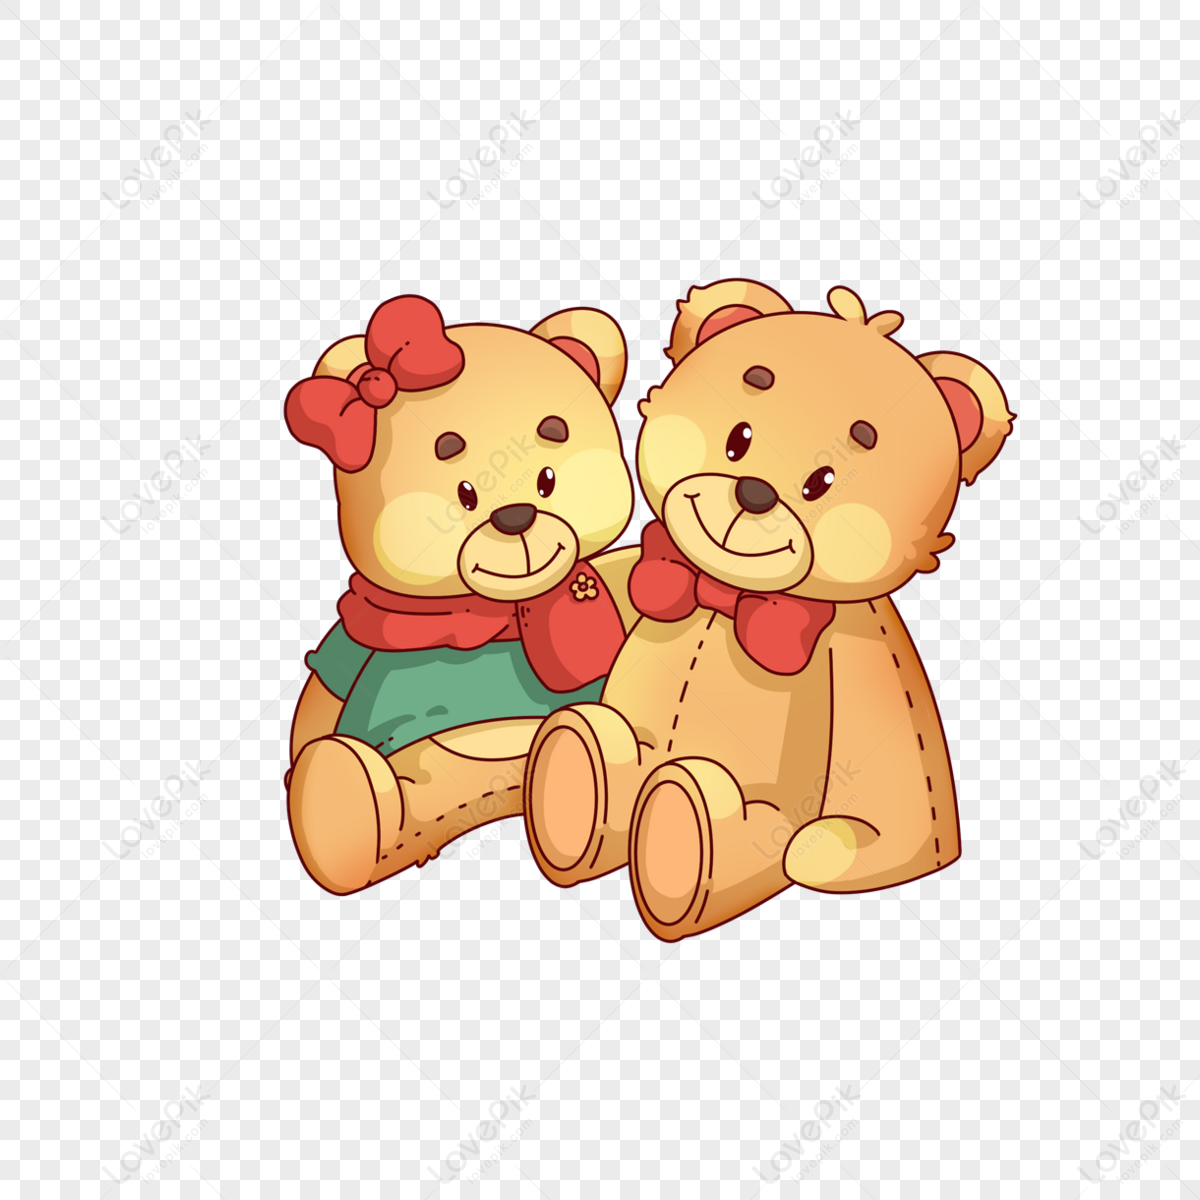 cartoon cute brown bear hug design map,illustration,character png white transparent